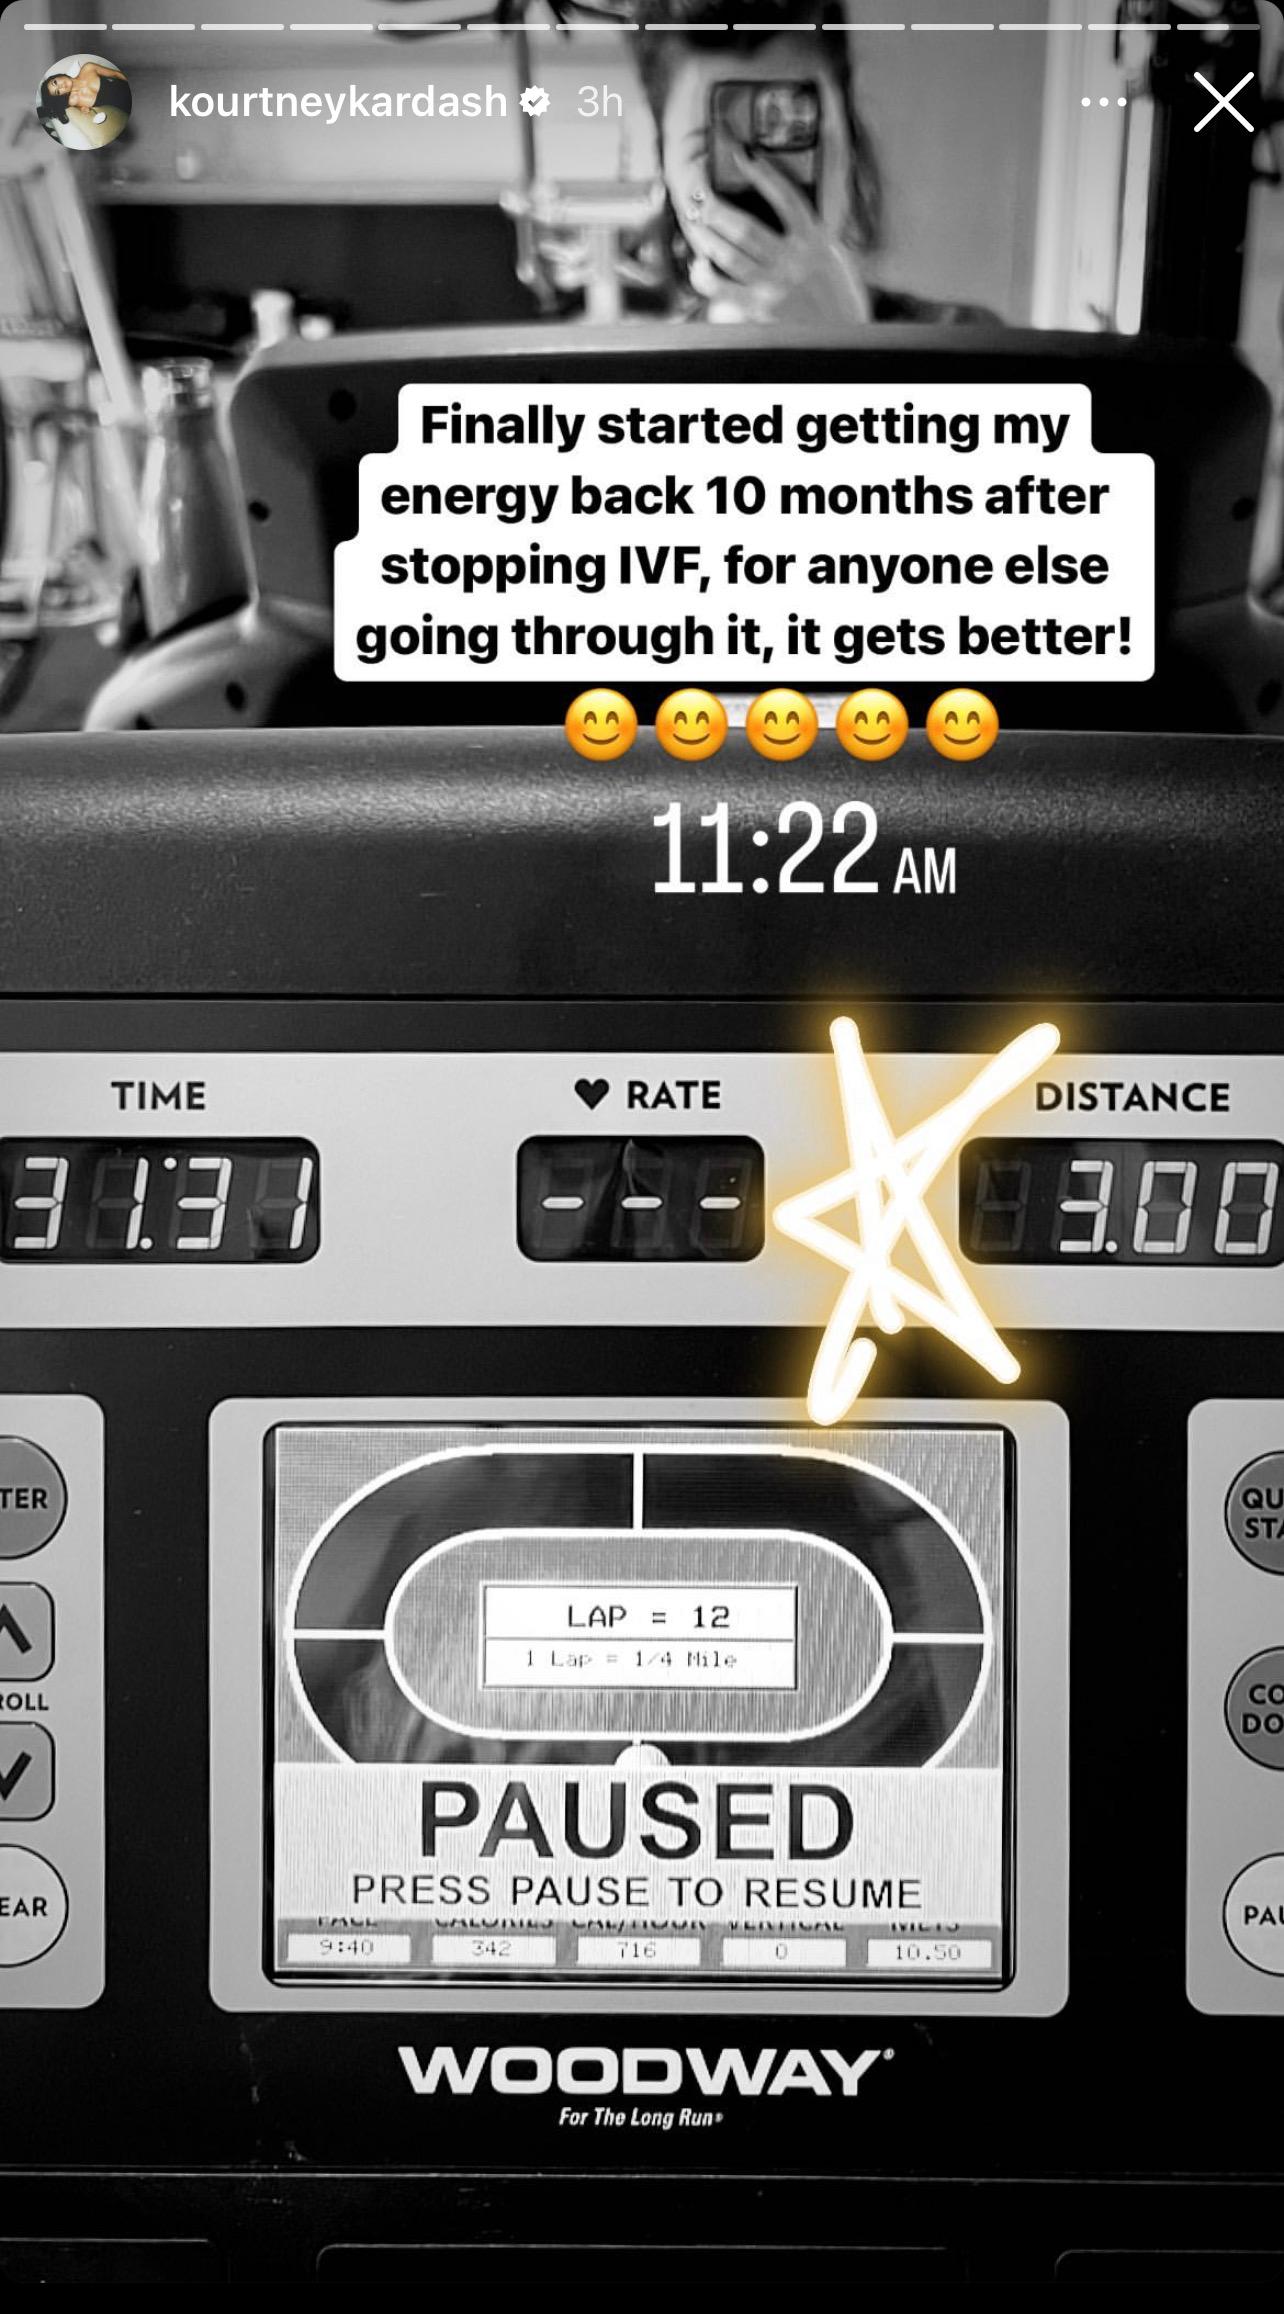 Kourtney Kardashian's post on her Instagram story